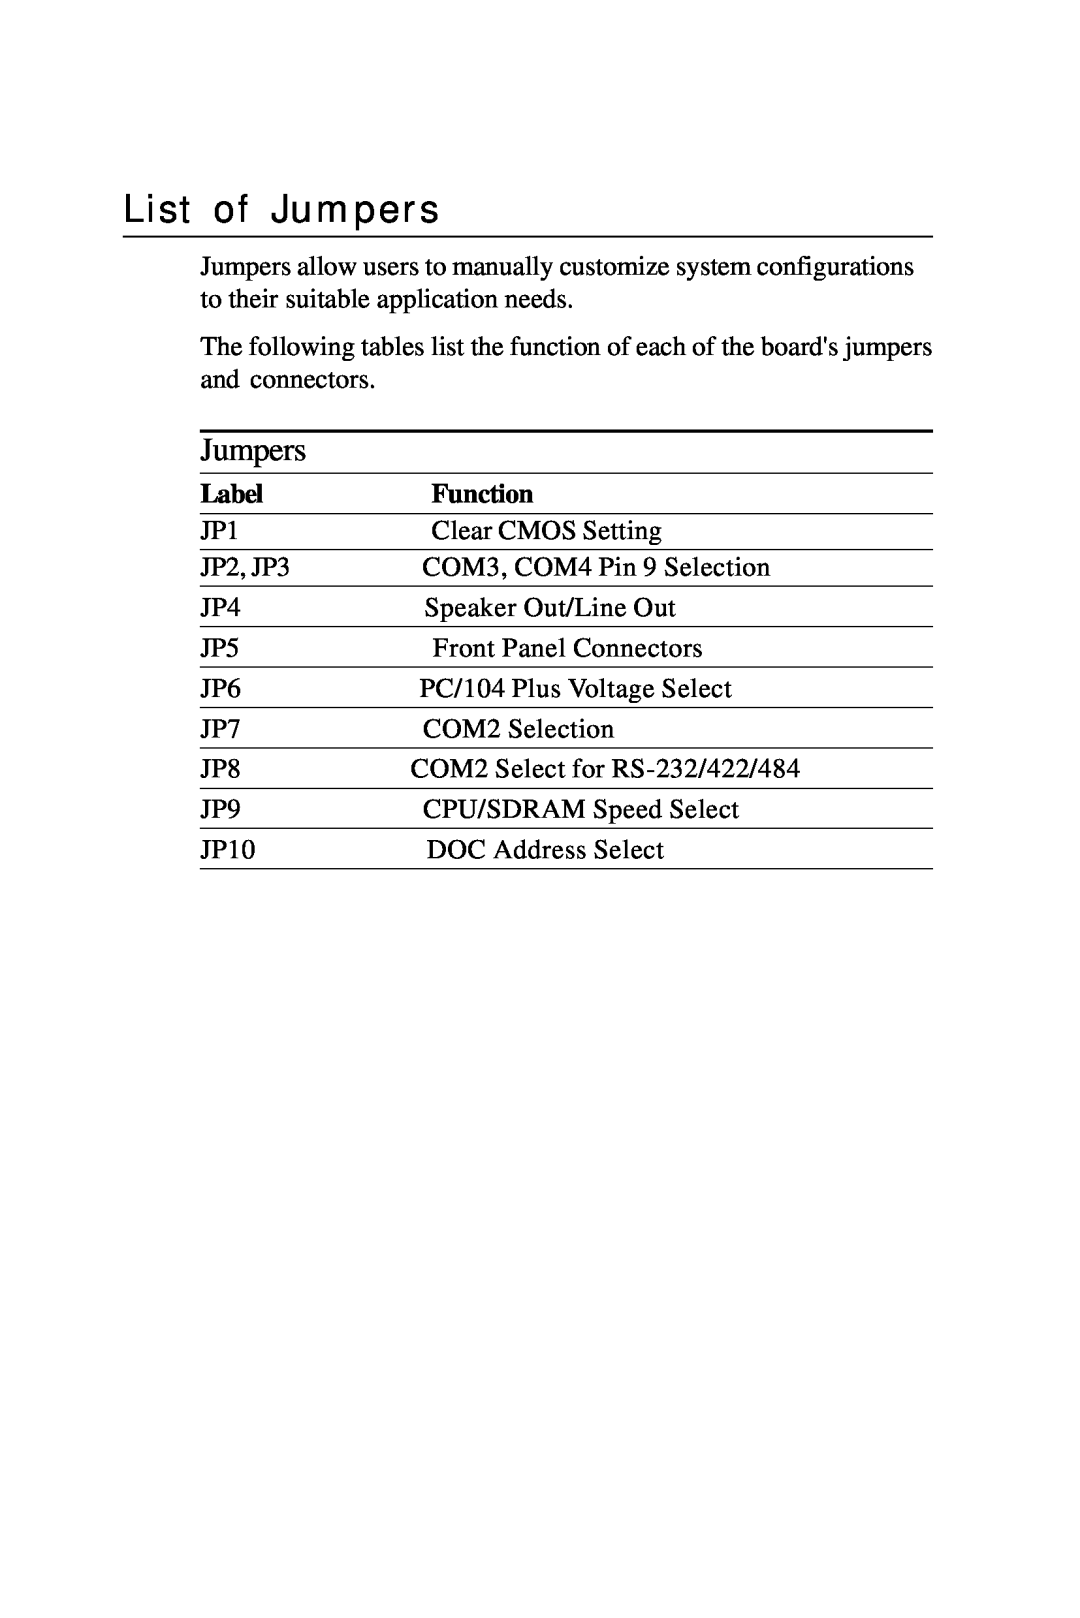 Intel PCM-6896 manual List of Jumpers 